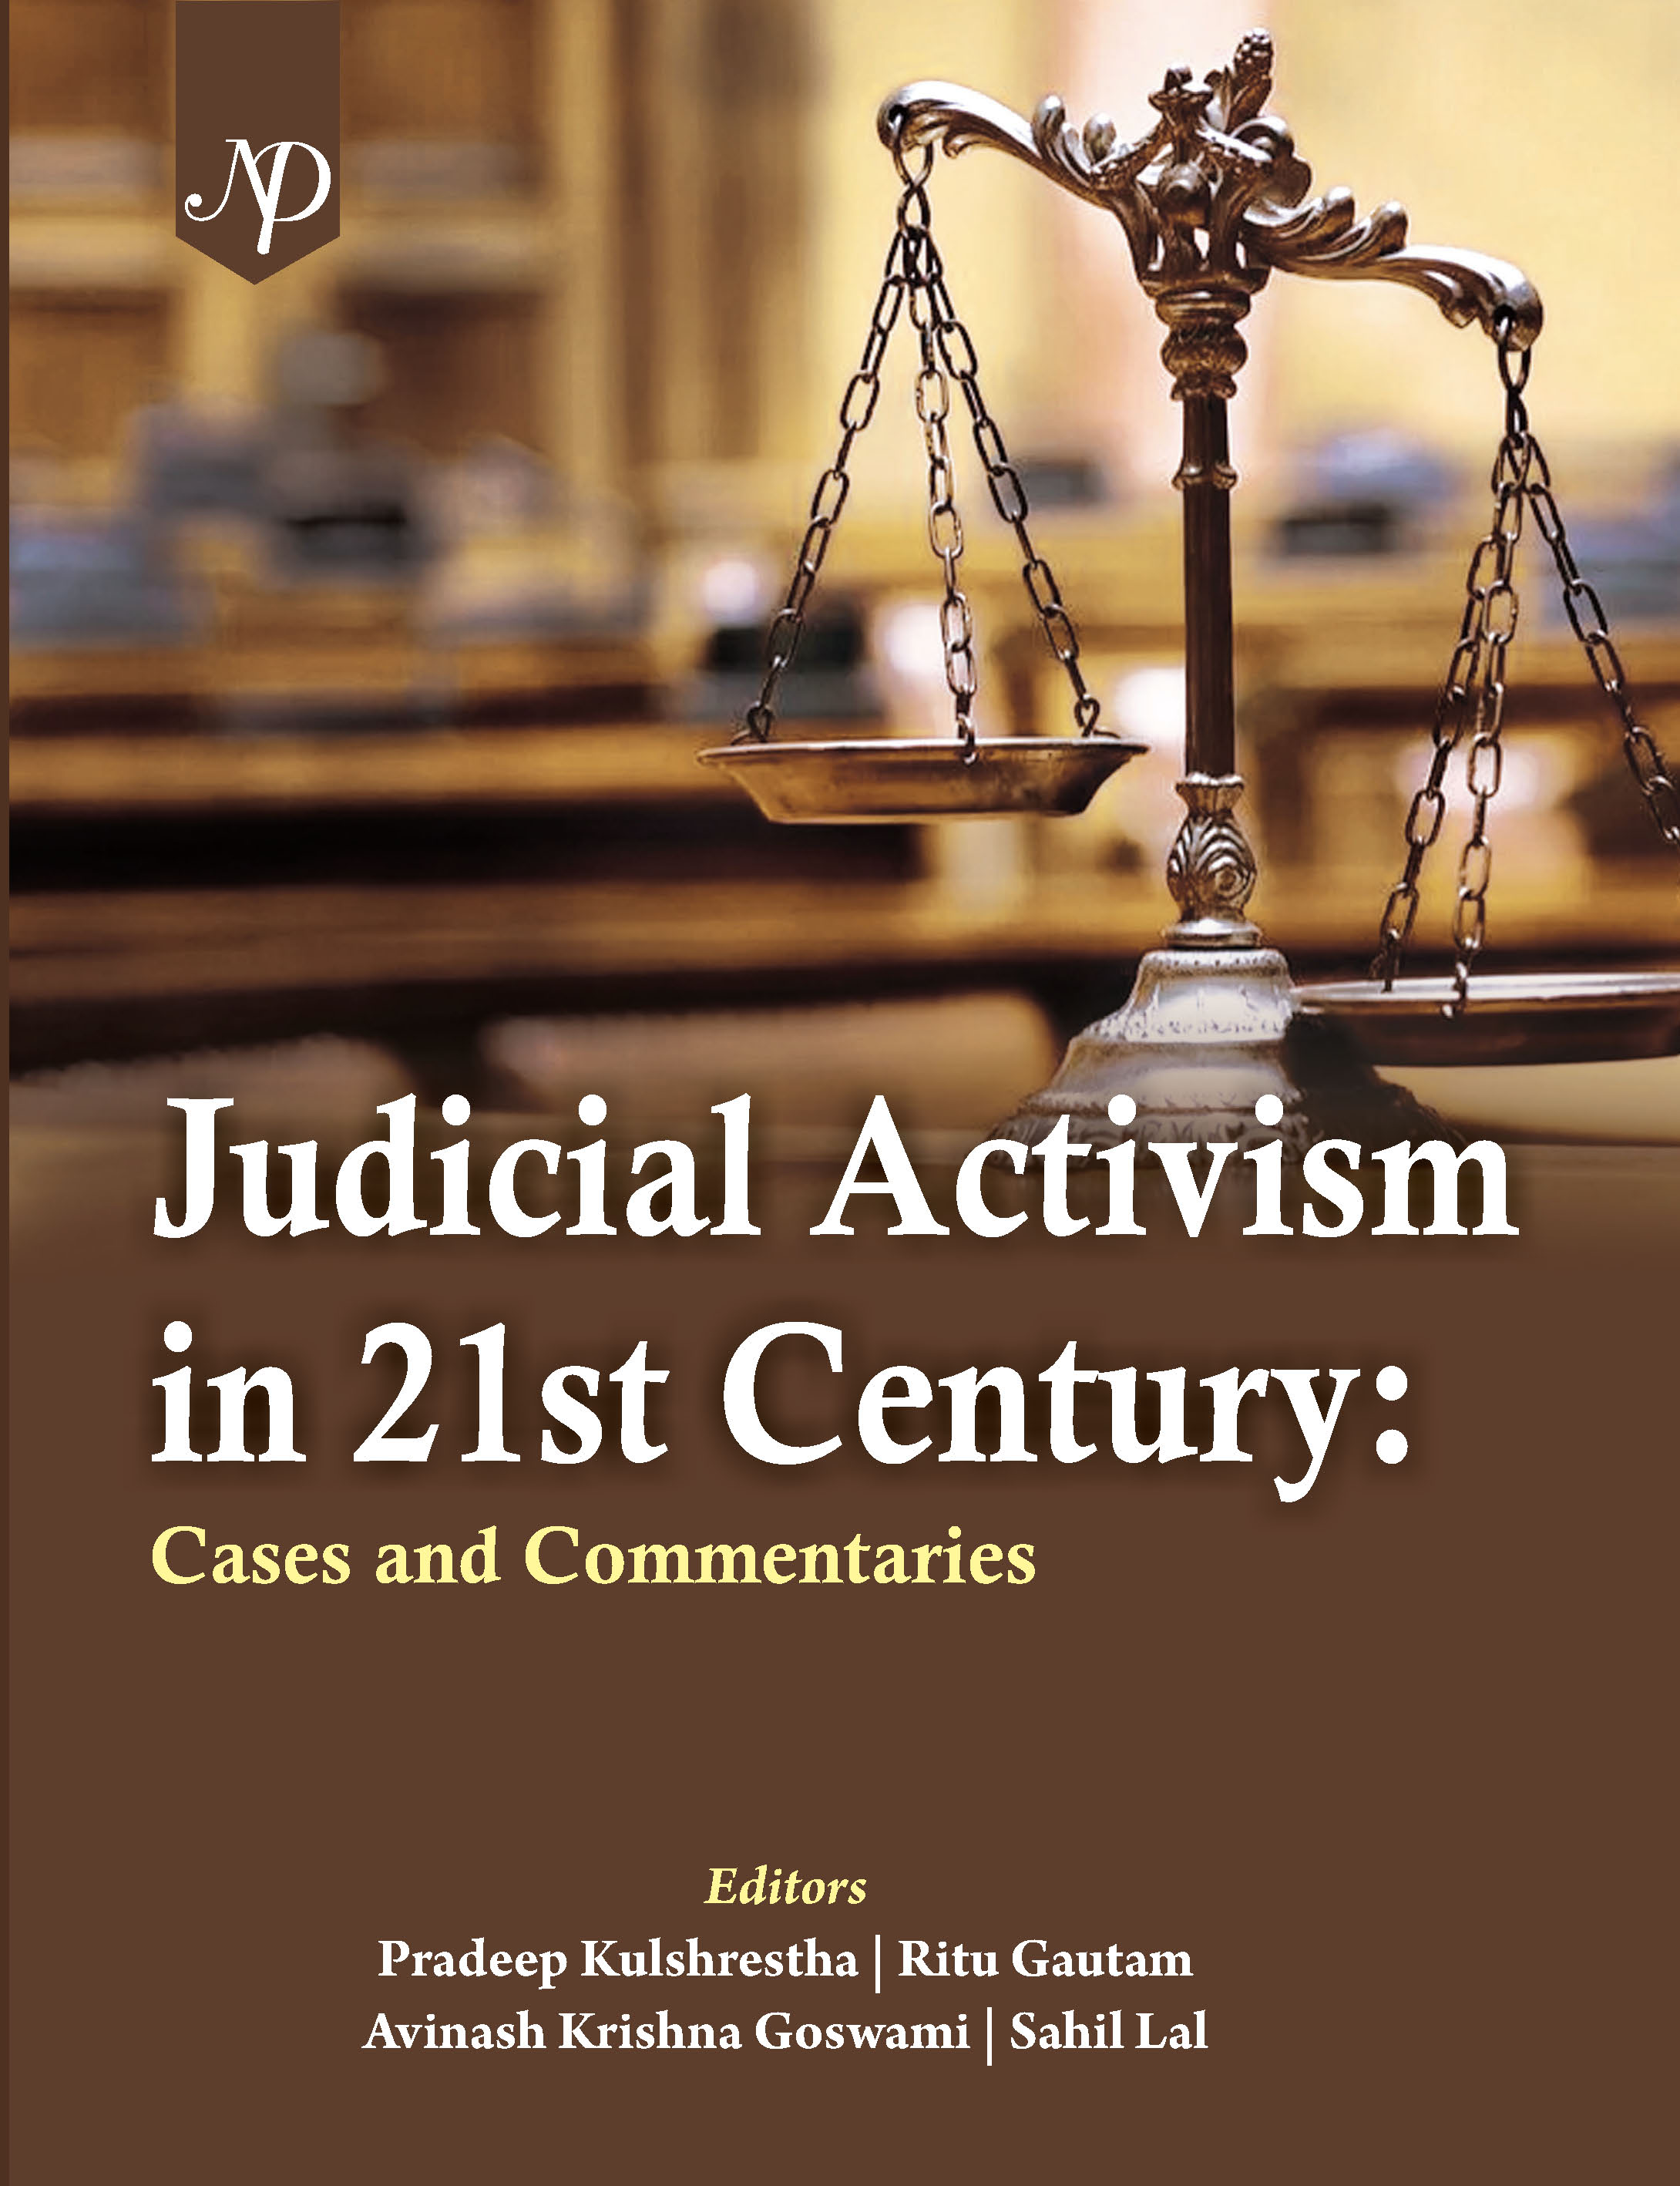 Judicial Activism in 21st century Cover (1).jpg